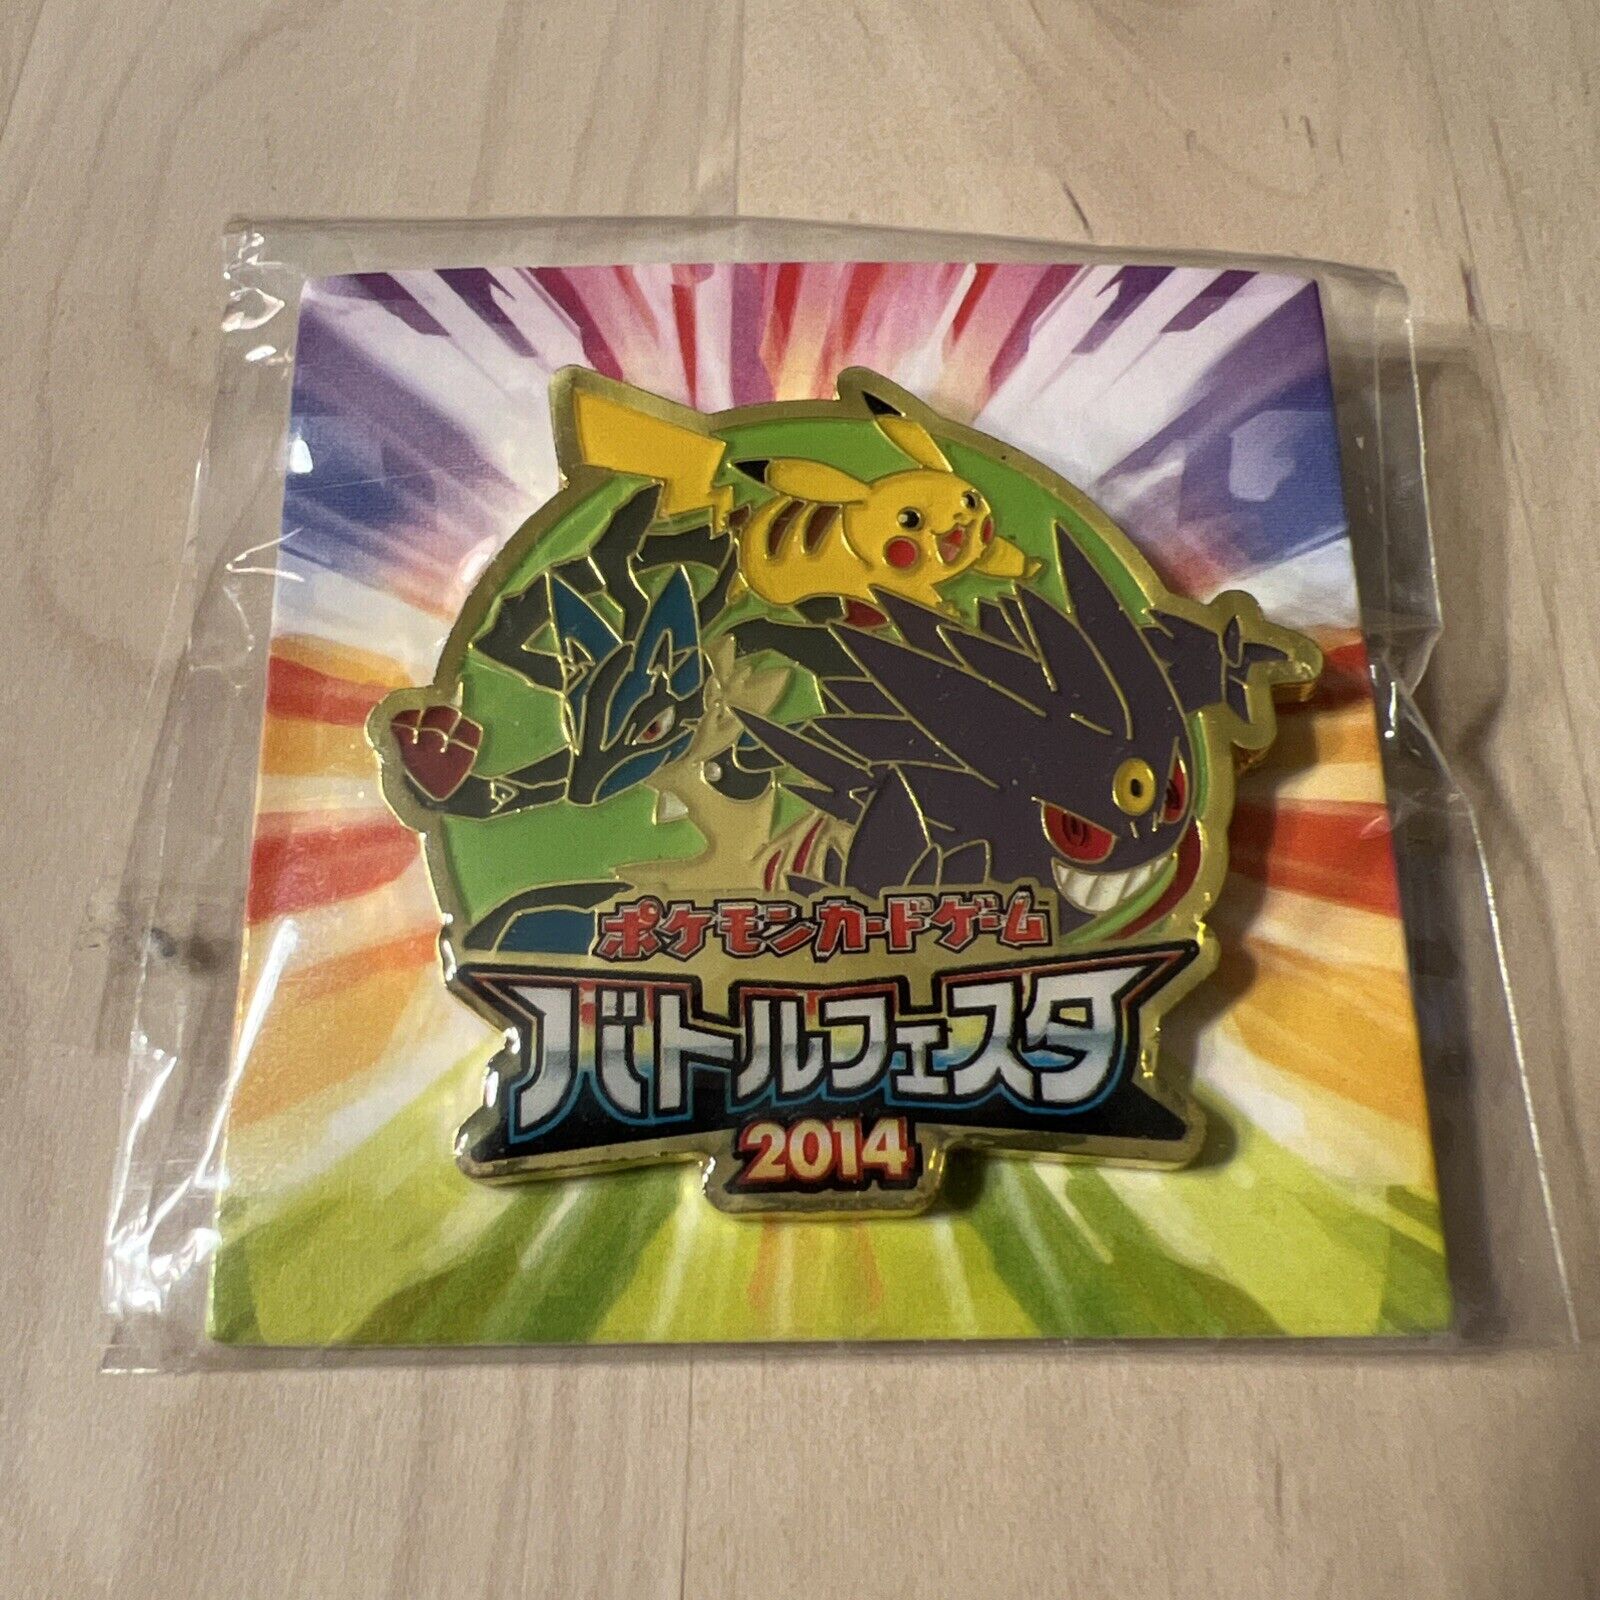 Pokemon Battle Festo 2014 pin badge Mega Ghengar Lucario Pikachu